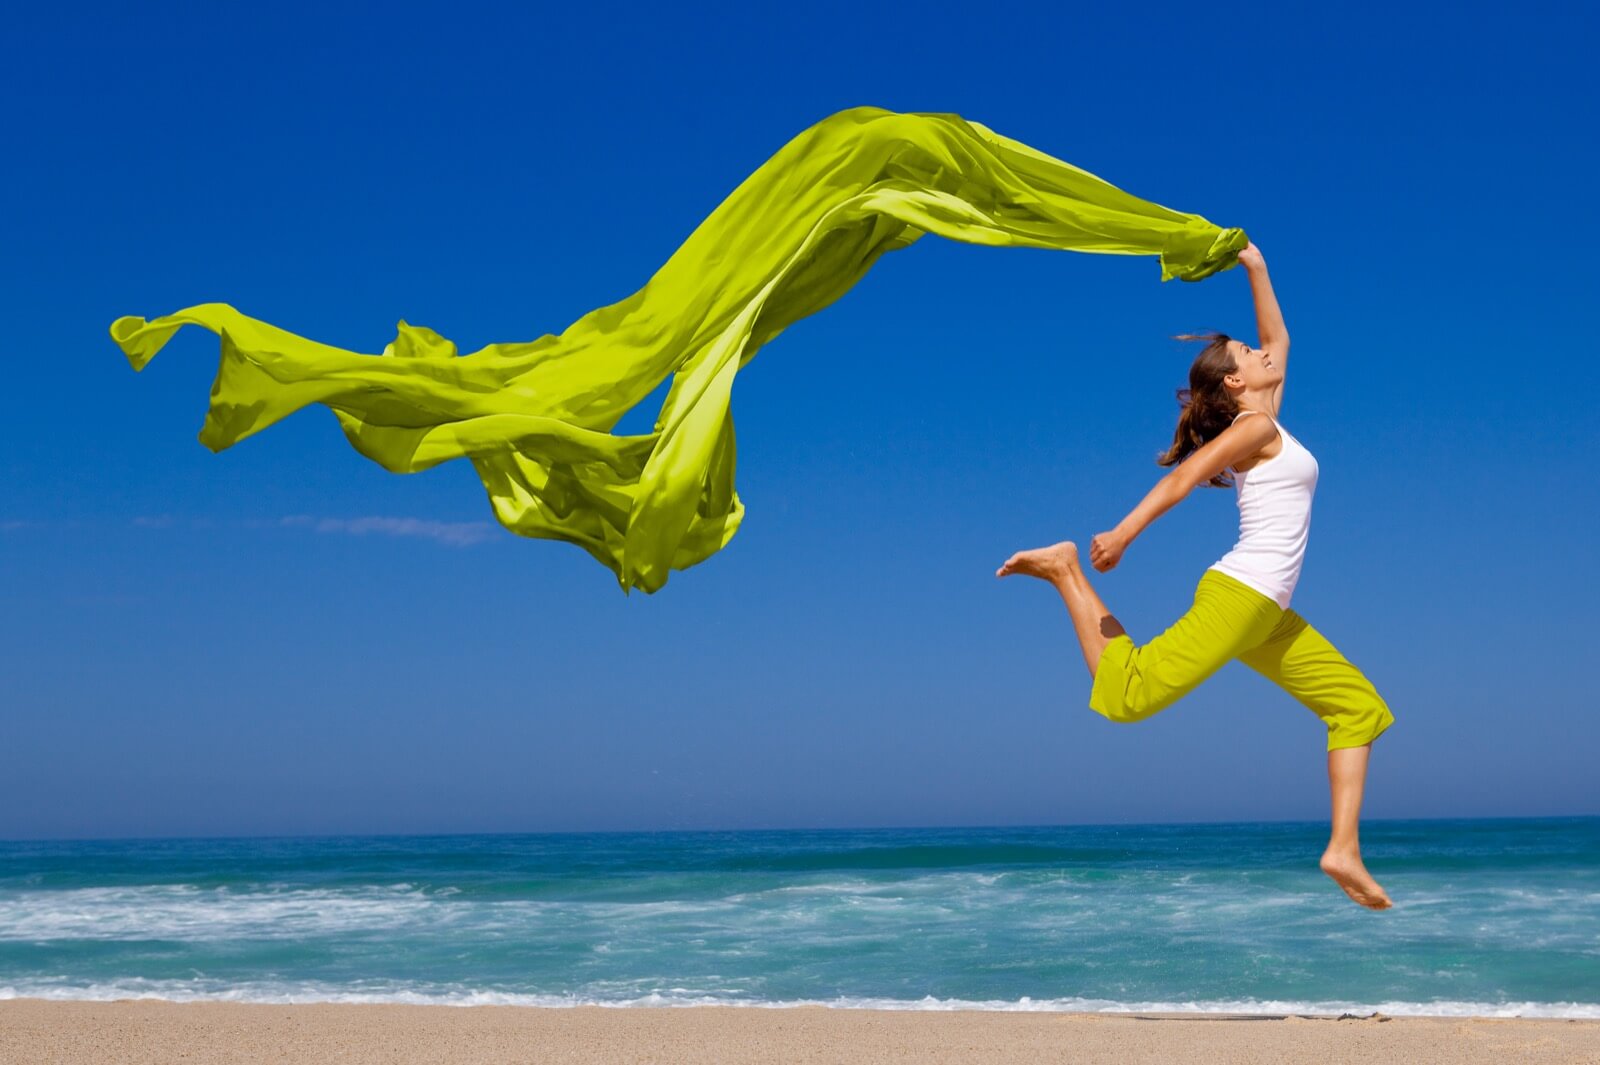 Frau am Strand mit freudigem Luftsprung. Voller Lebensfreude.